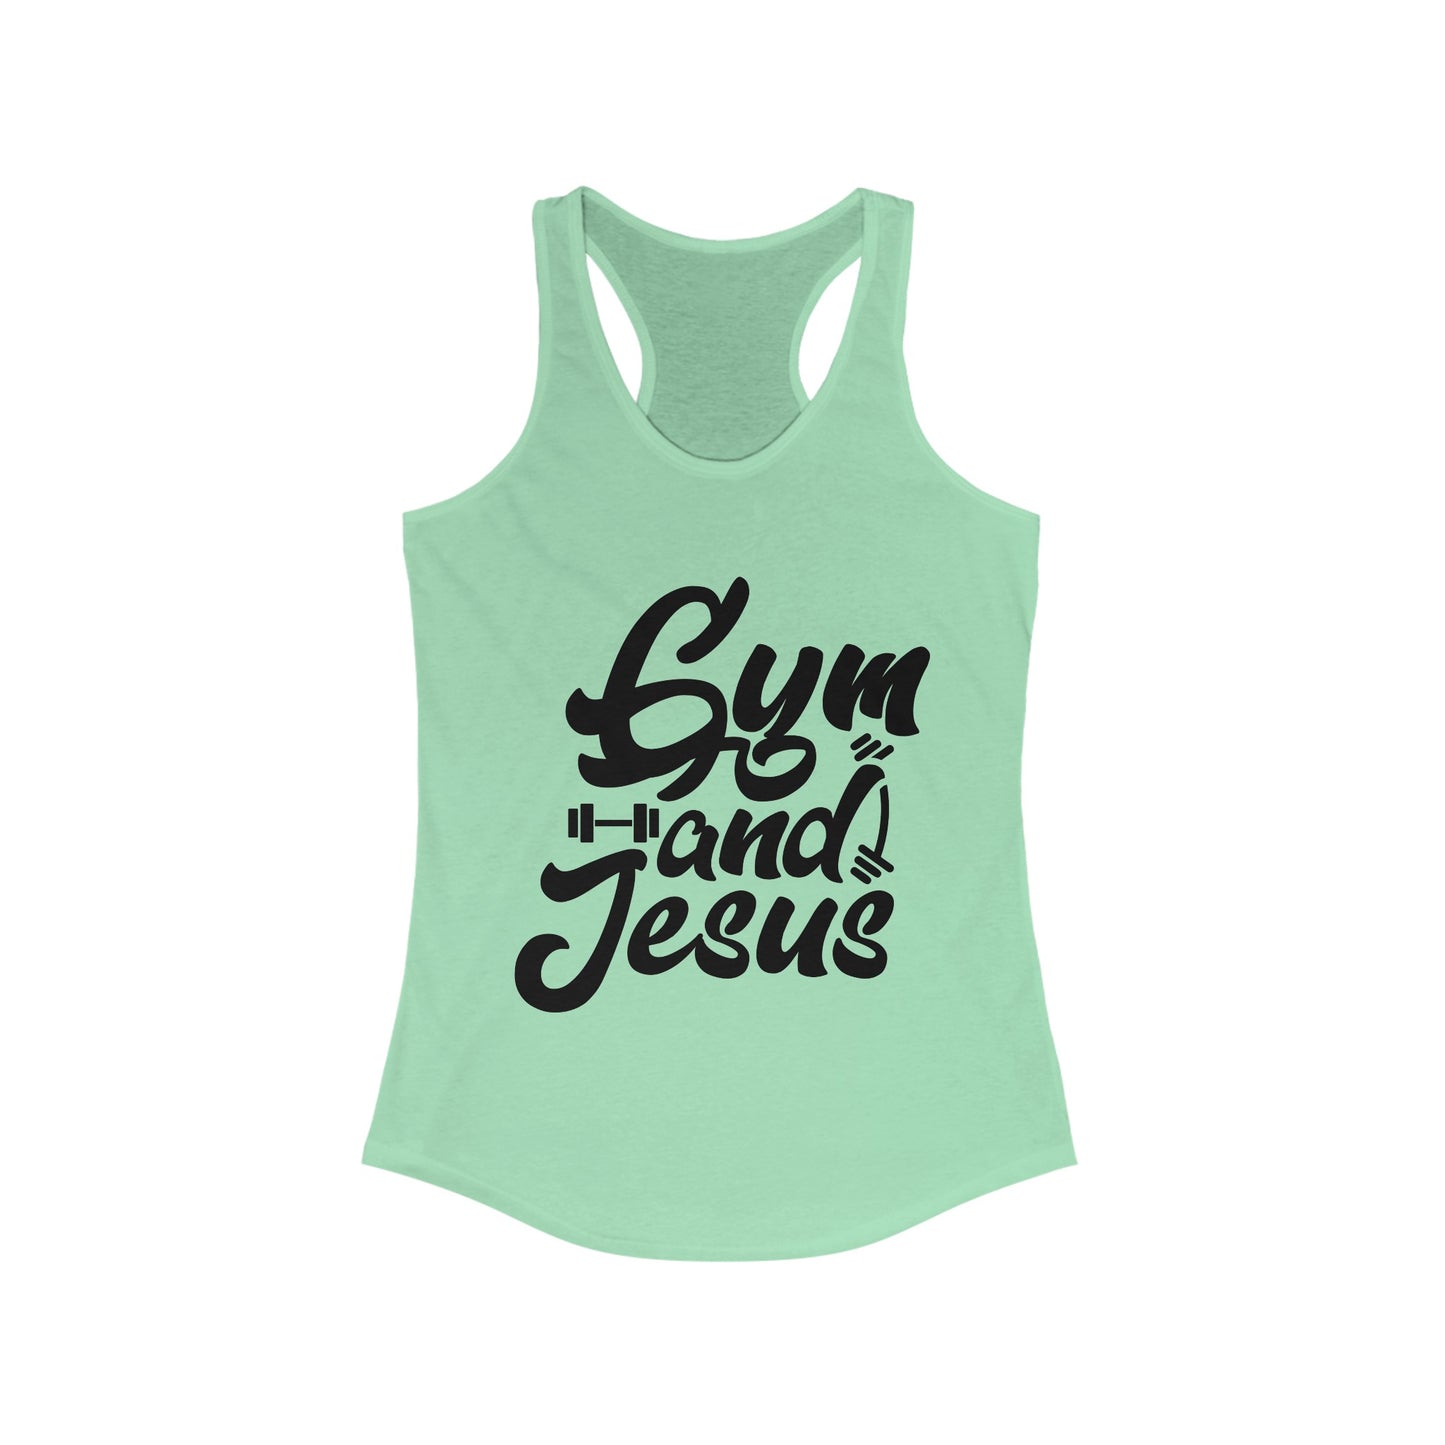 Gym and Jesus Women's Racerback Tank (Black Logo)